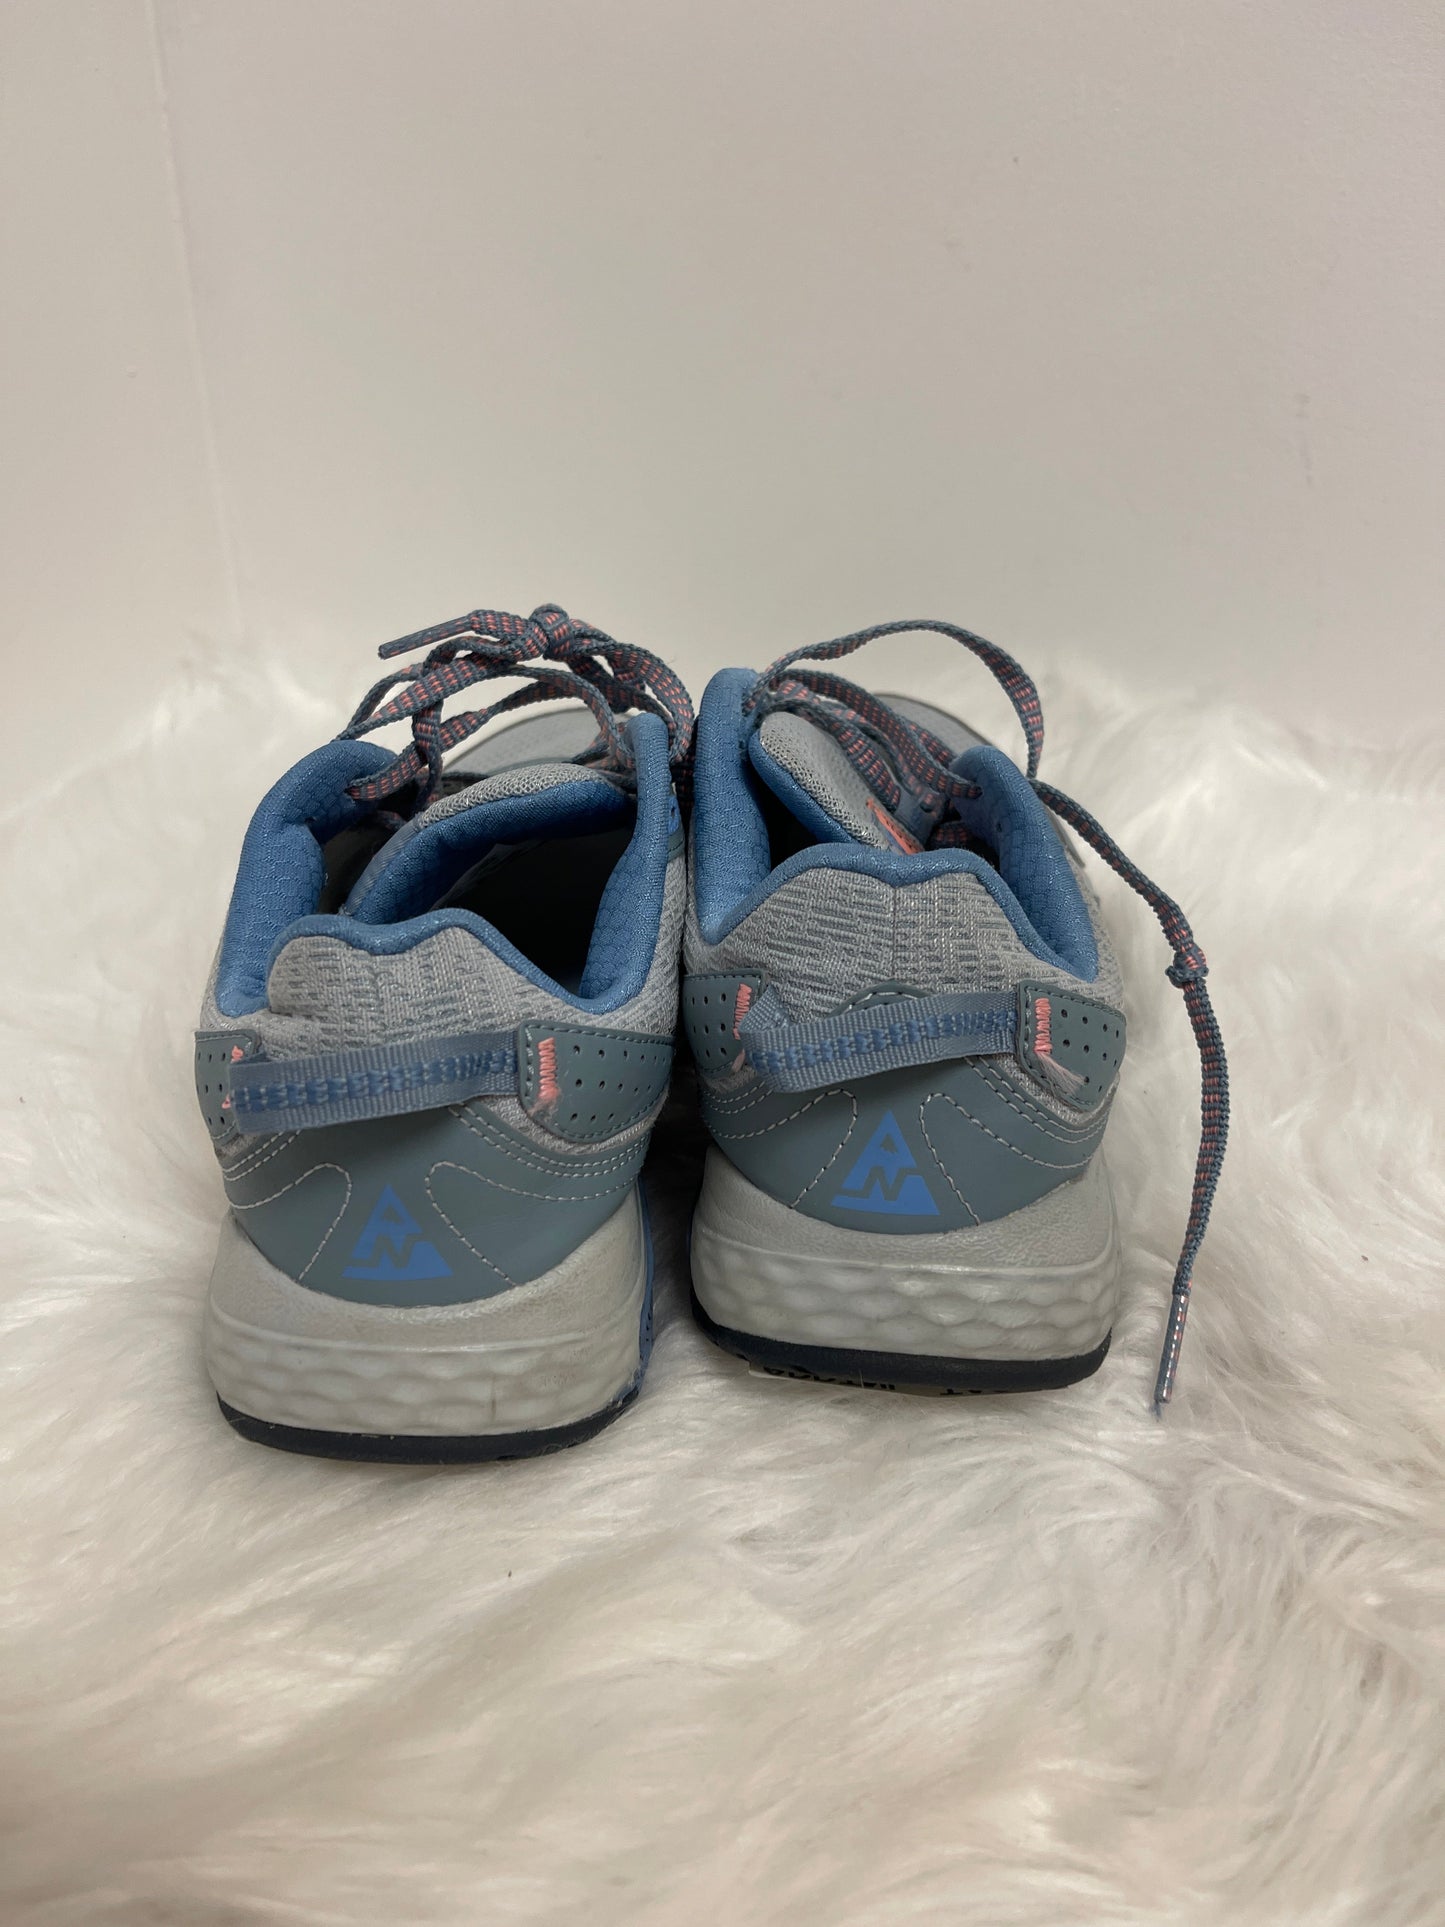 Blue Shoes Athletic New Balance, Size 8.5